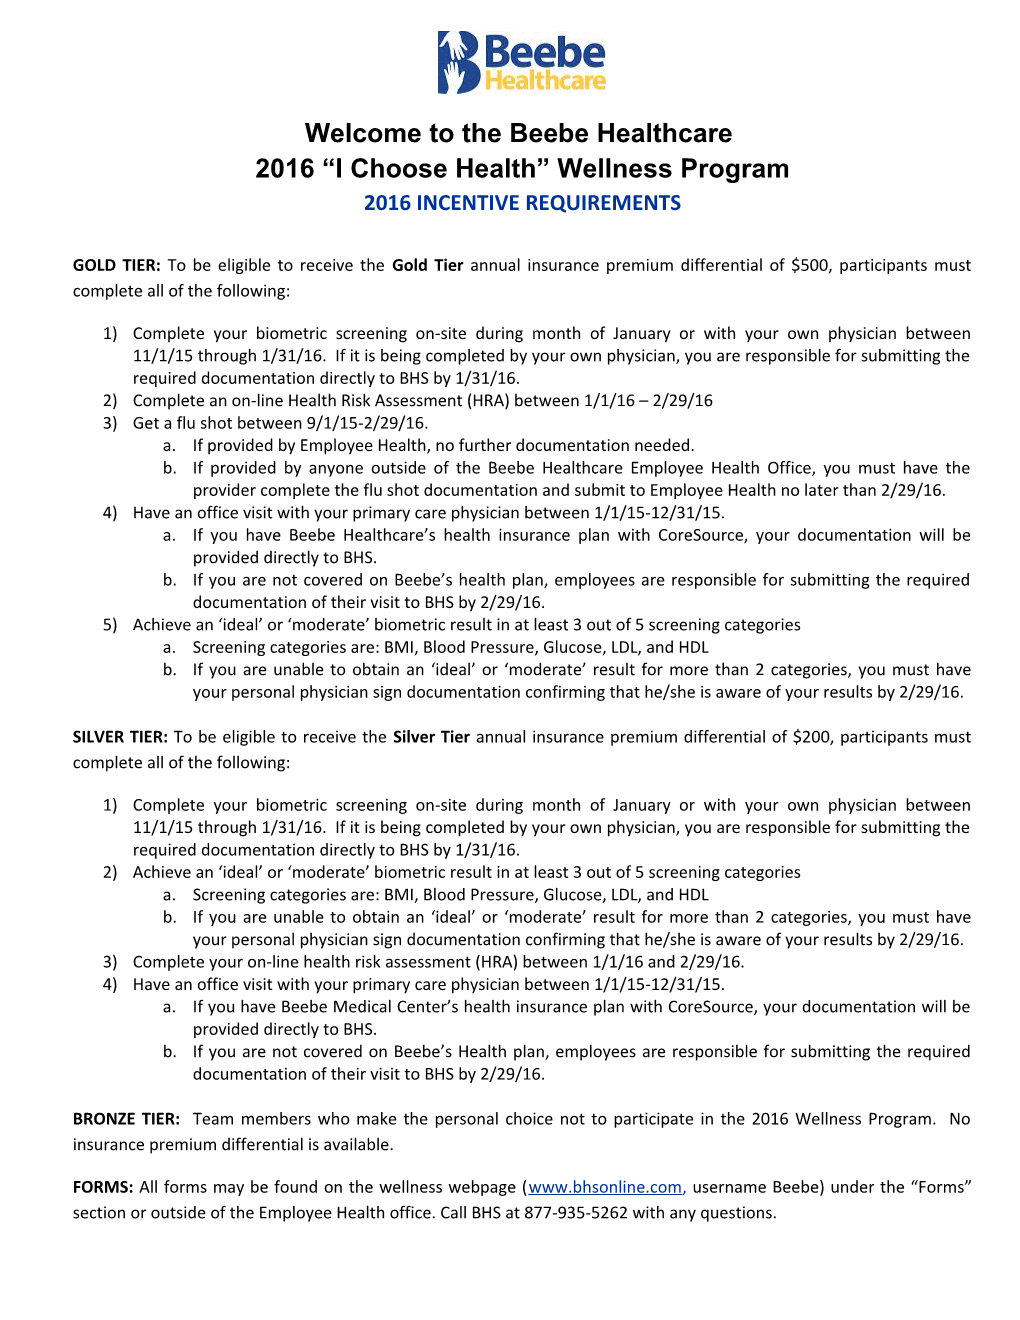 Welcome to the Beebe Healthcare 2016 I Choose Health Wellness Program